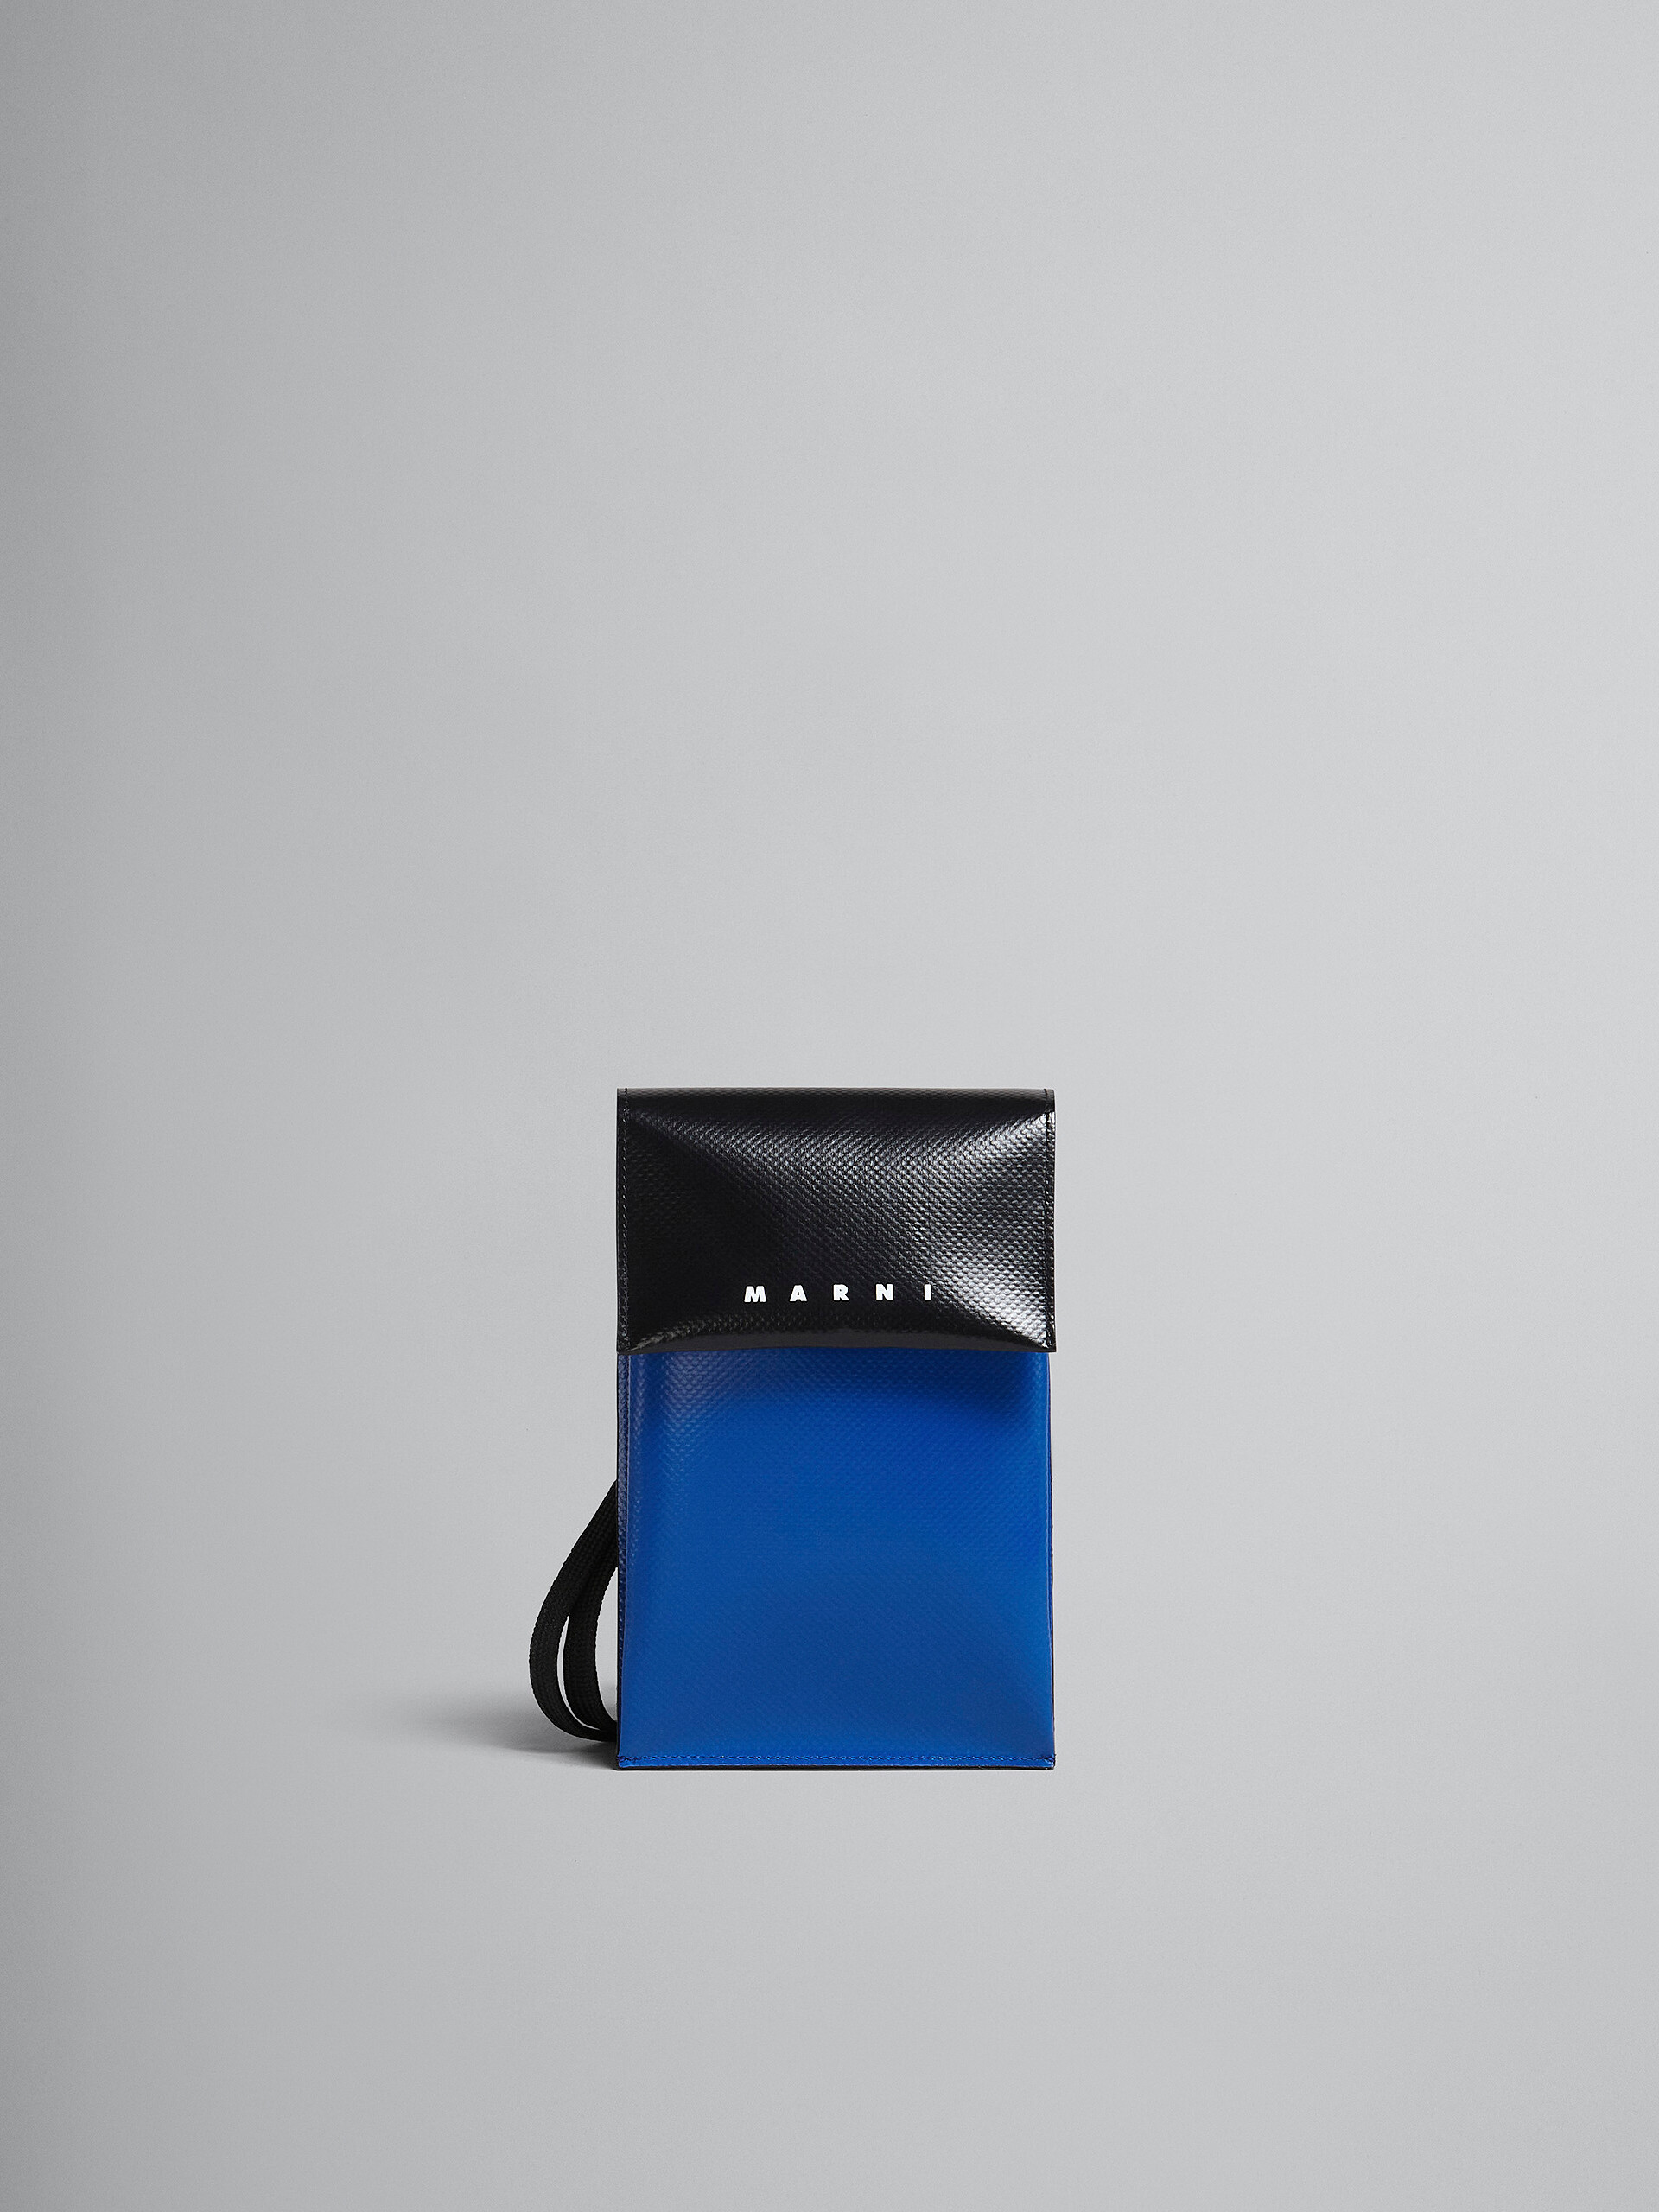 Tribeca blue and black phone case